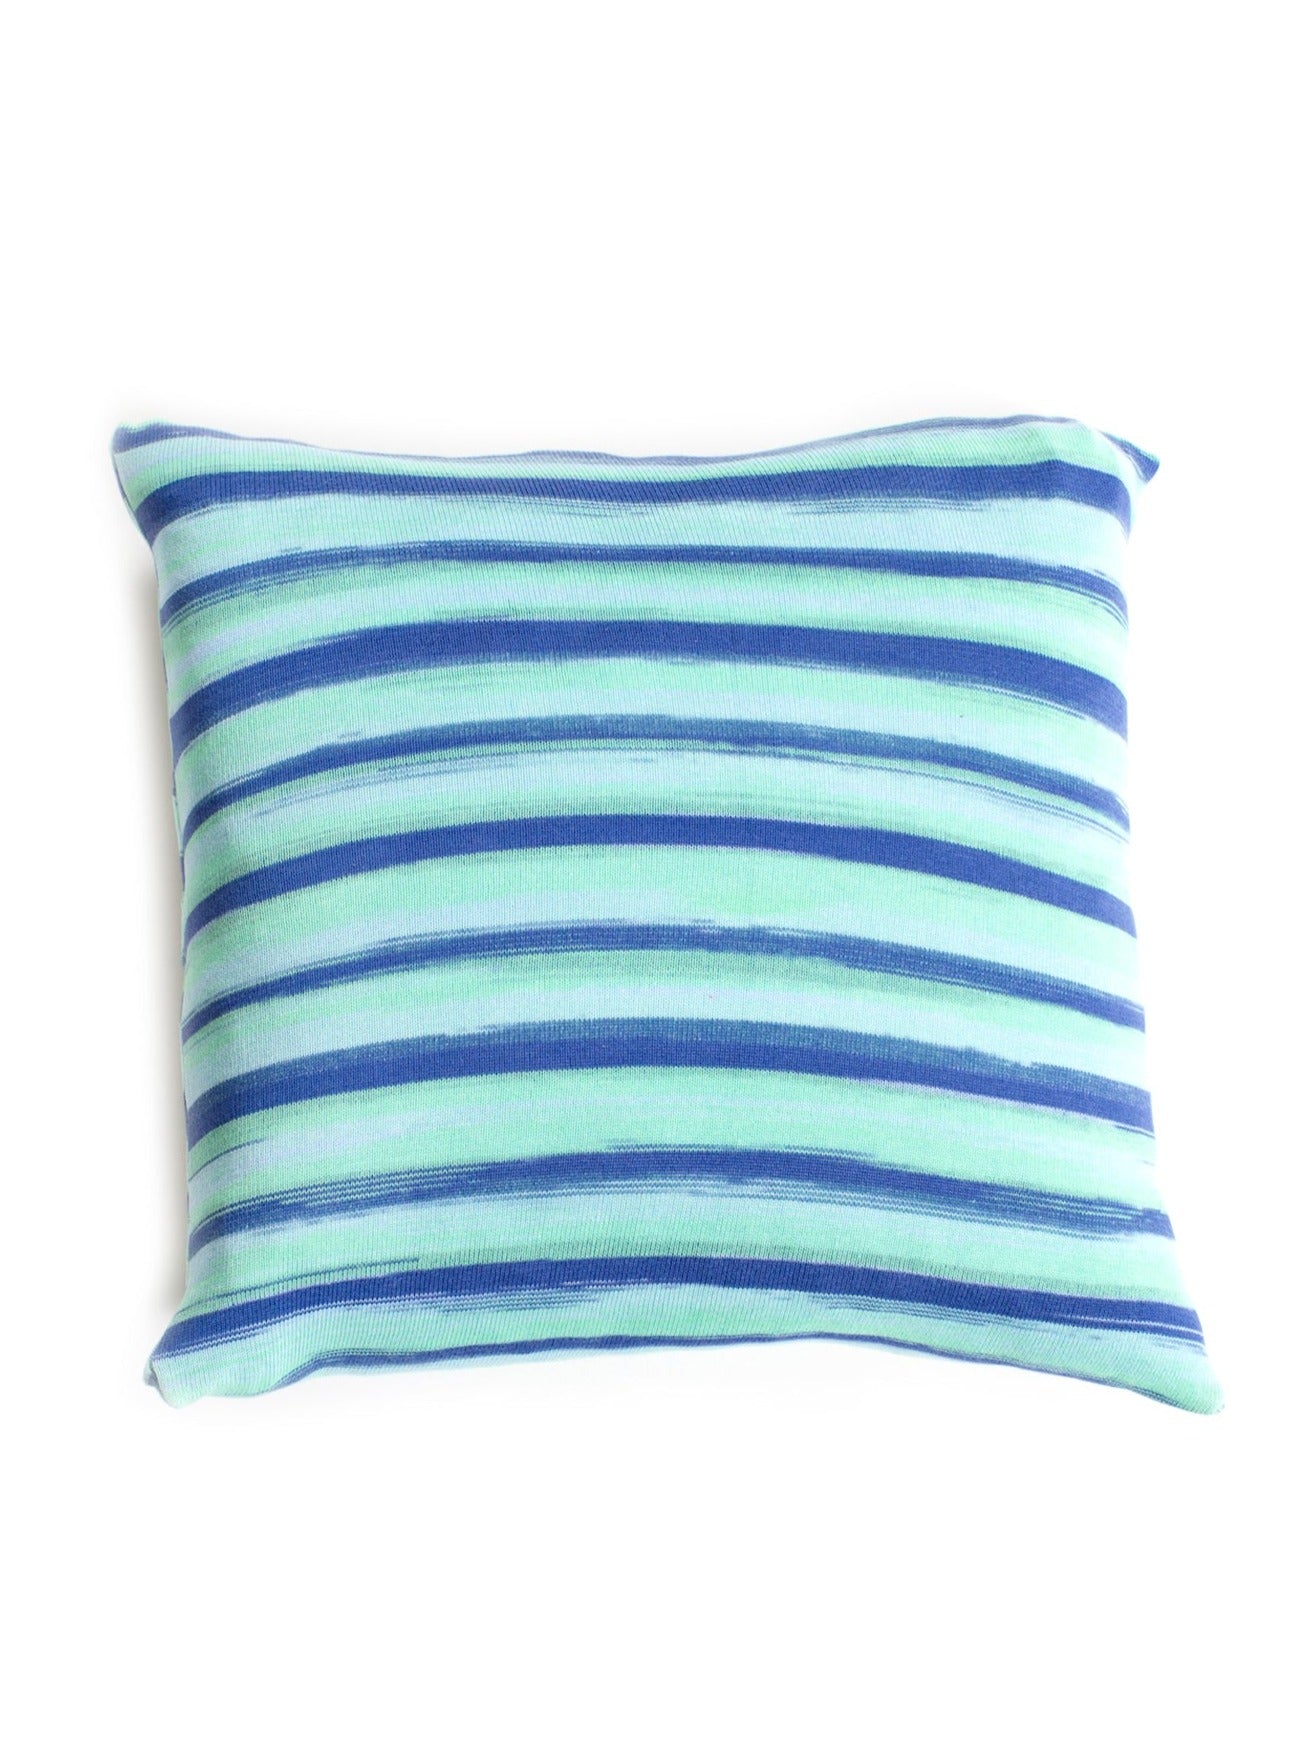 ocean space dye bamboo knit pillow cover home decor